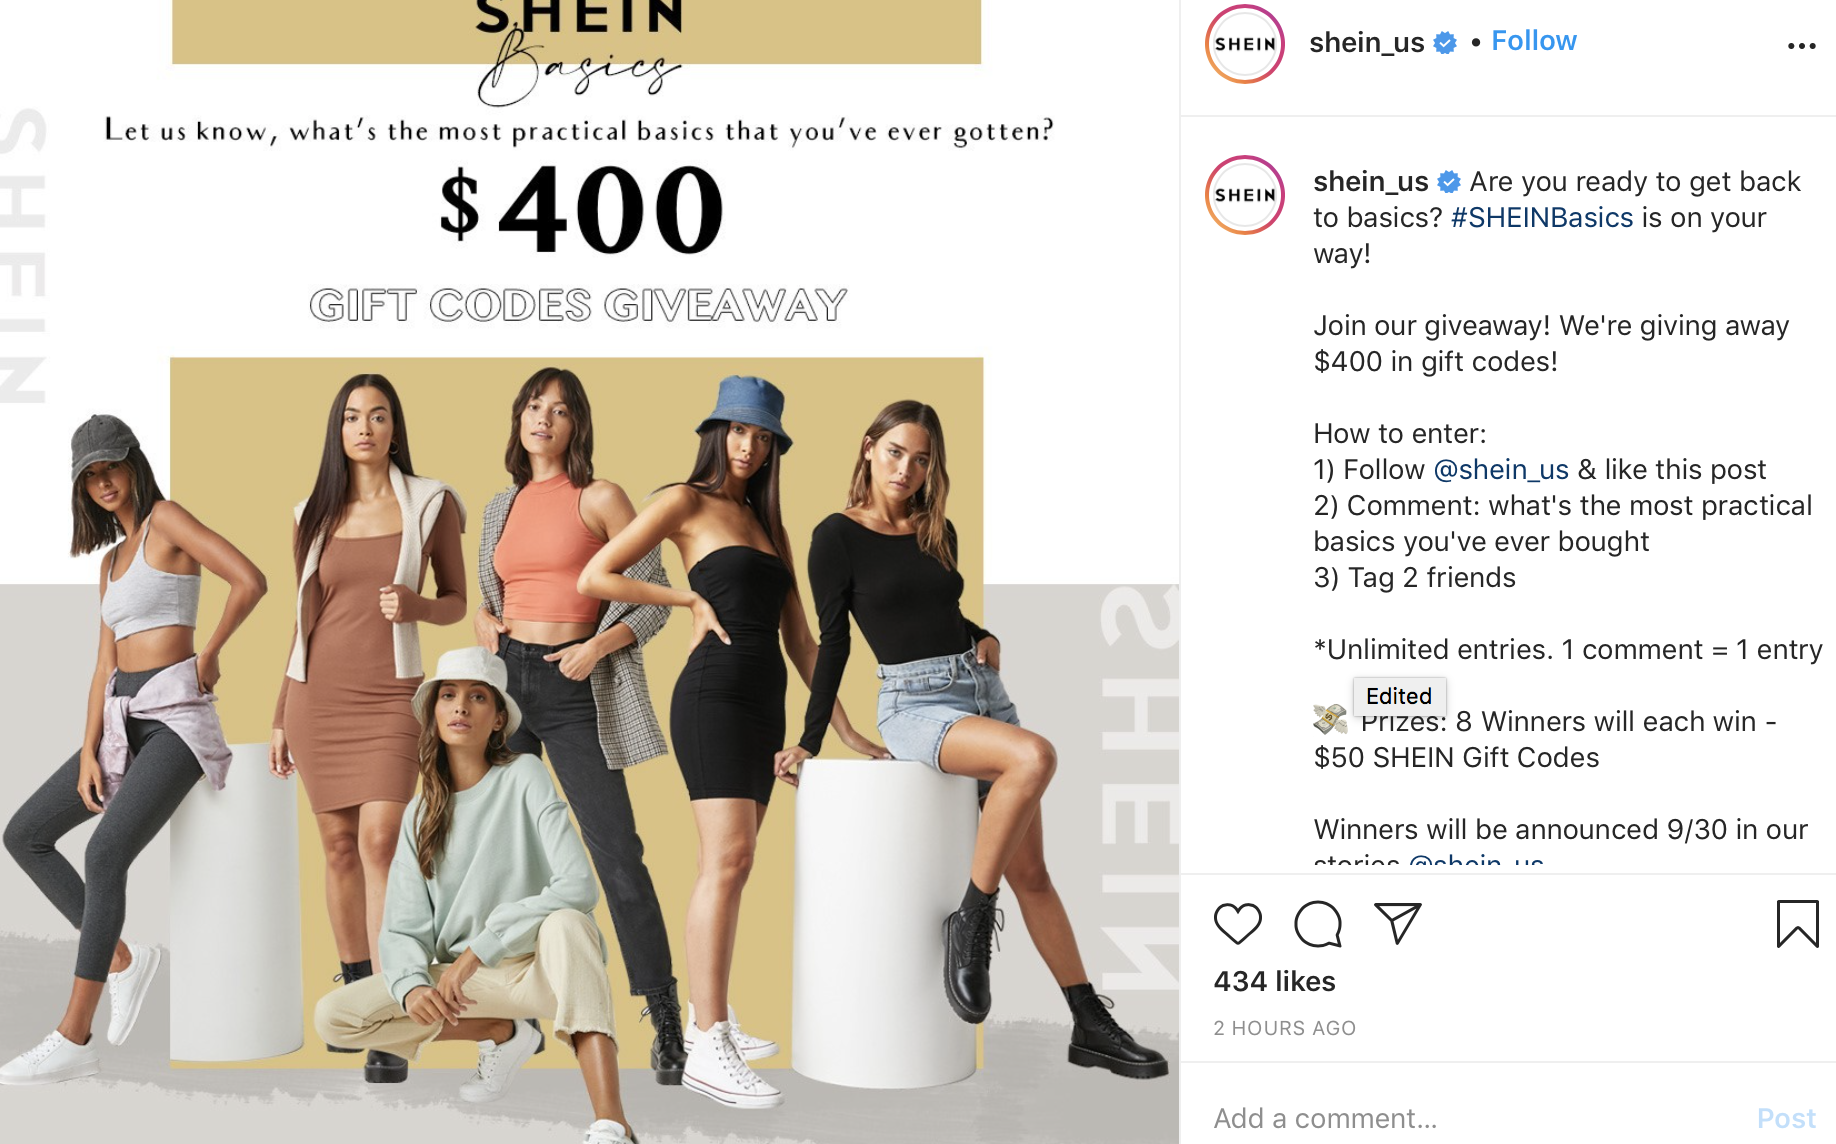 SHEIN USA advertisement - Gift Code Giveaways 